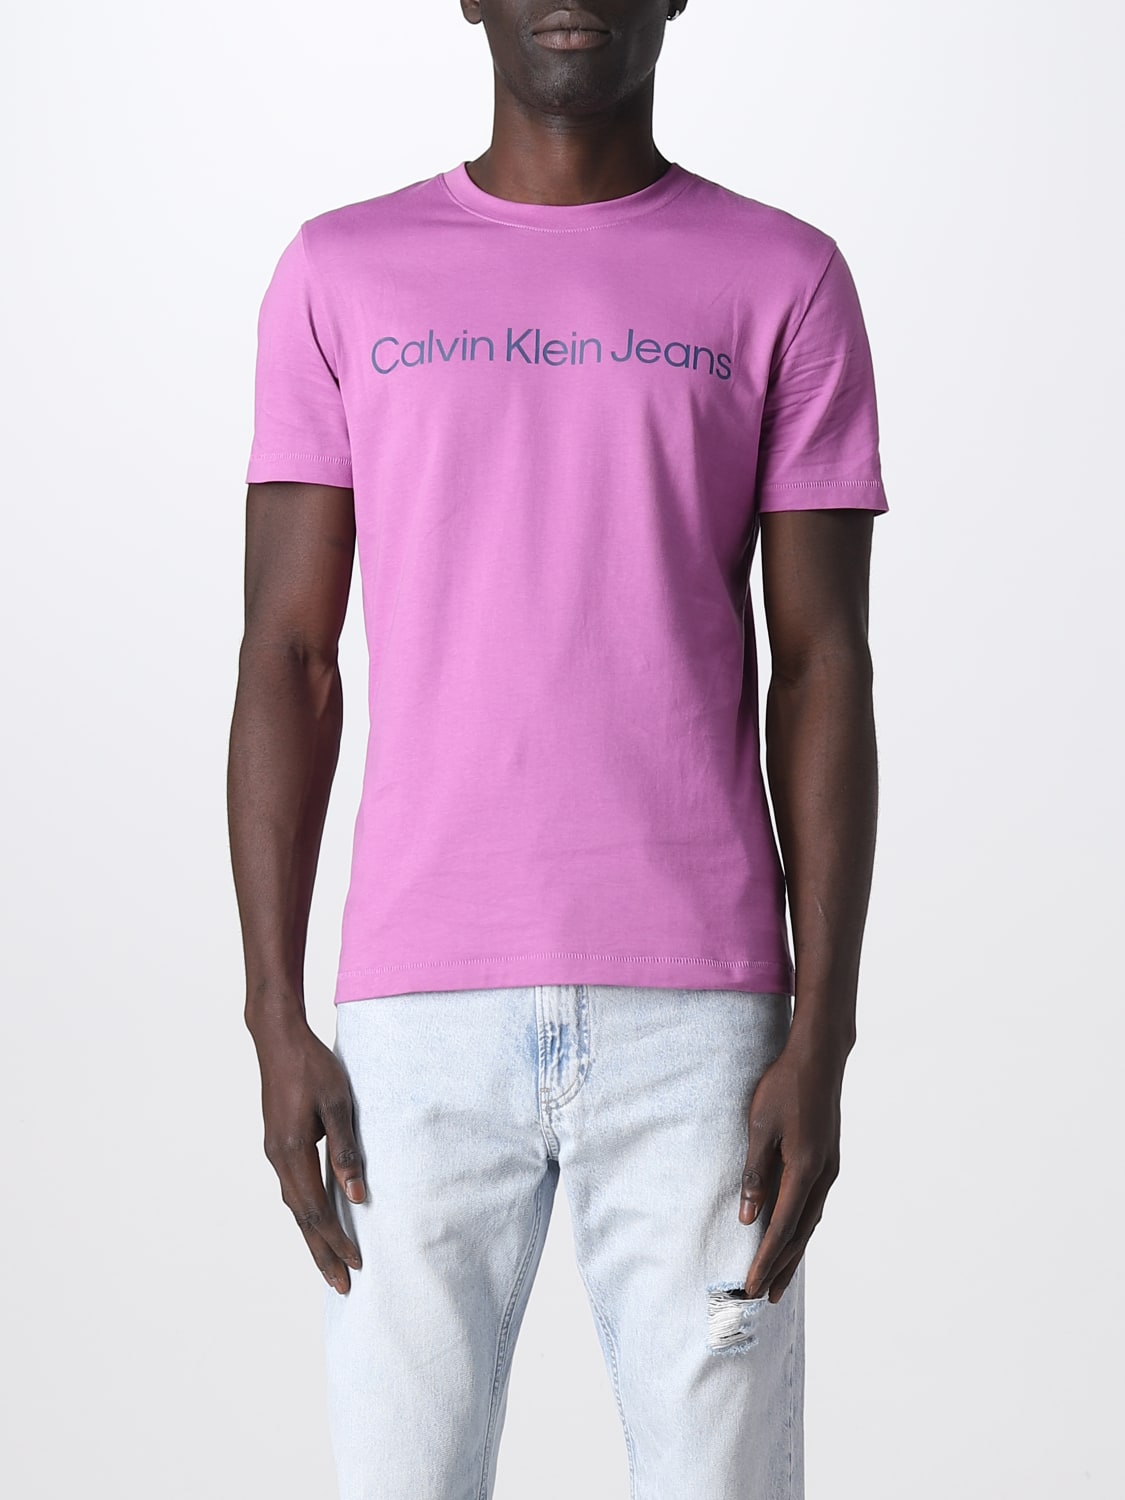 nyt år vakuum øverste hak CALVIN KLEIN JEANS: t-shirt for man - Orchid | Calvin Klein Jeans t-shirt  J30J322344 online on GIGLIO.COM